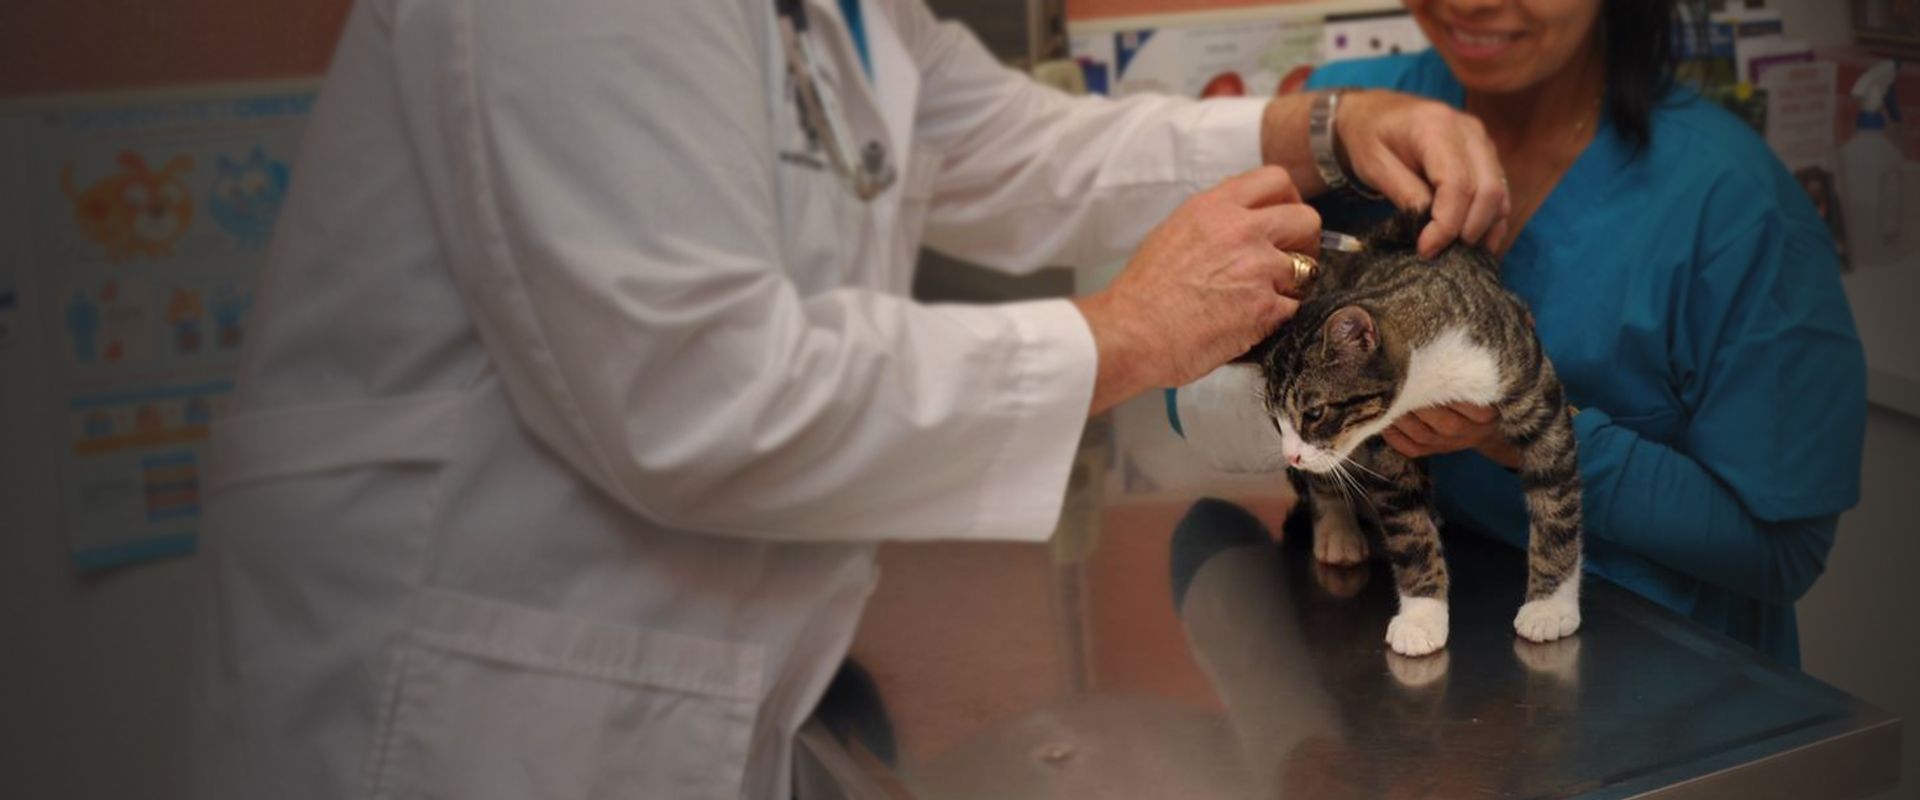 doctor douglas vaccinating cat his assistant